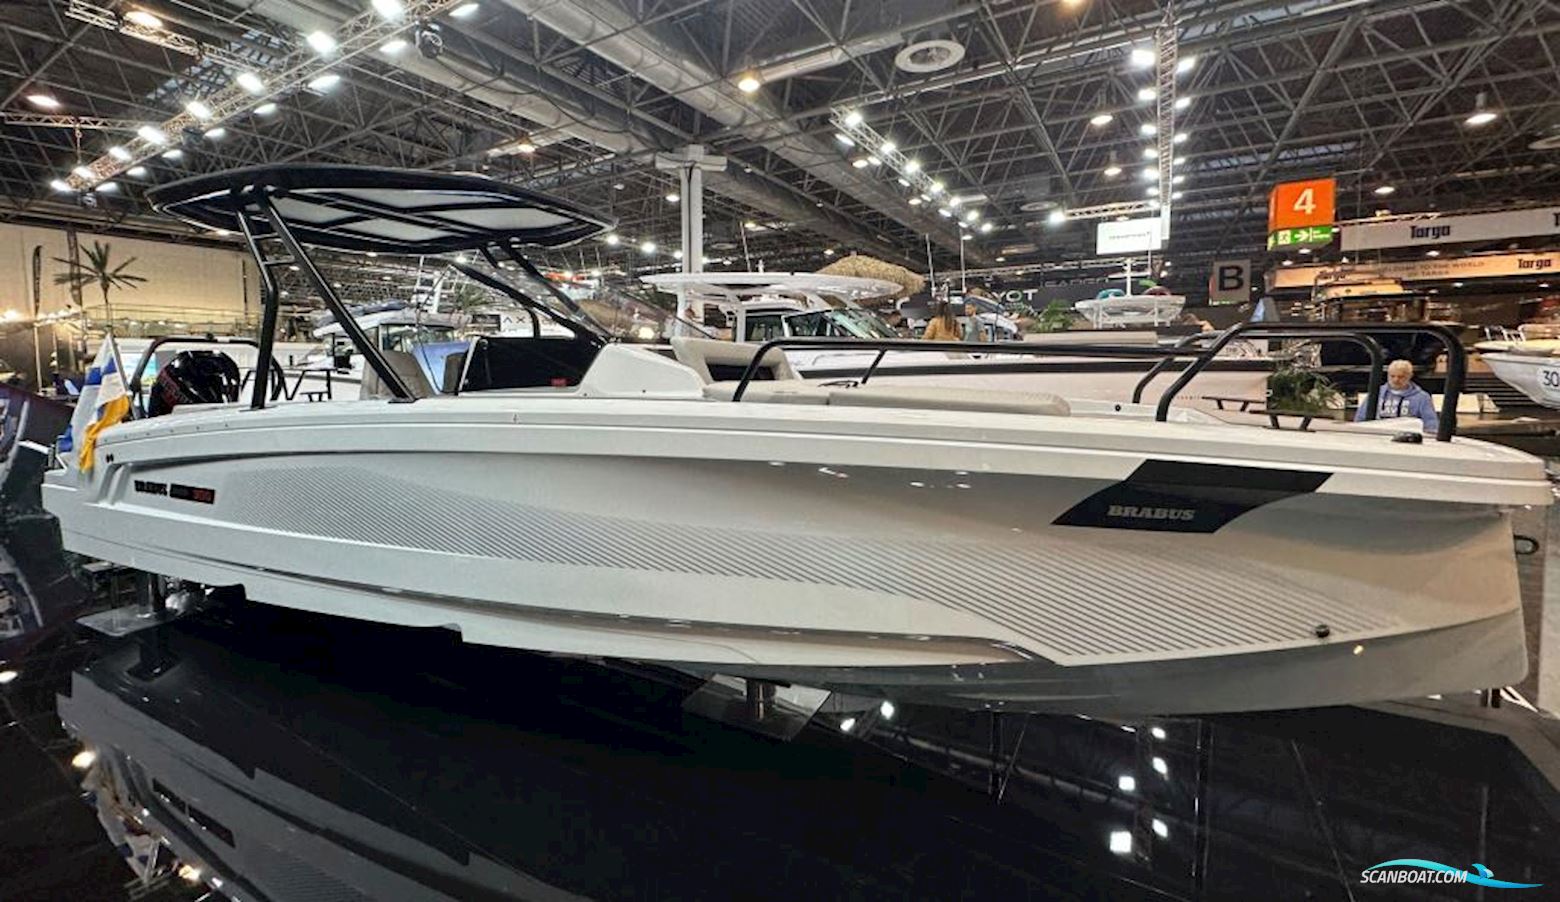 Brabus 300 Shadow - U Sofa Motorbåd 2023, med Mercury motor, Tyskland